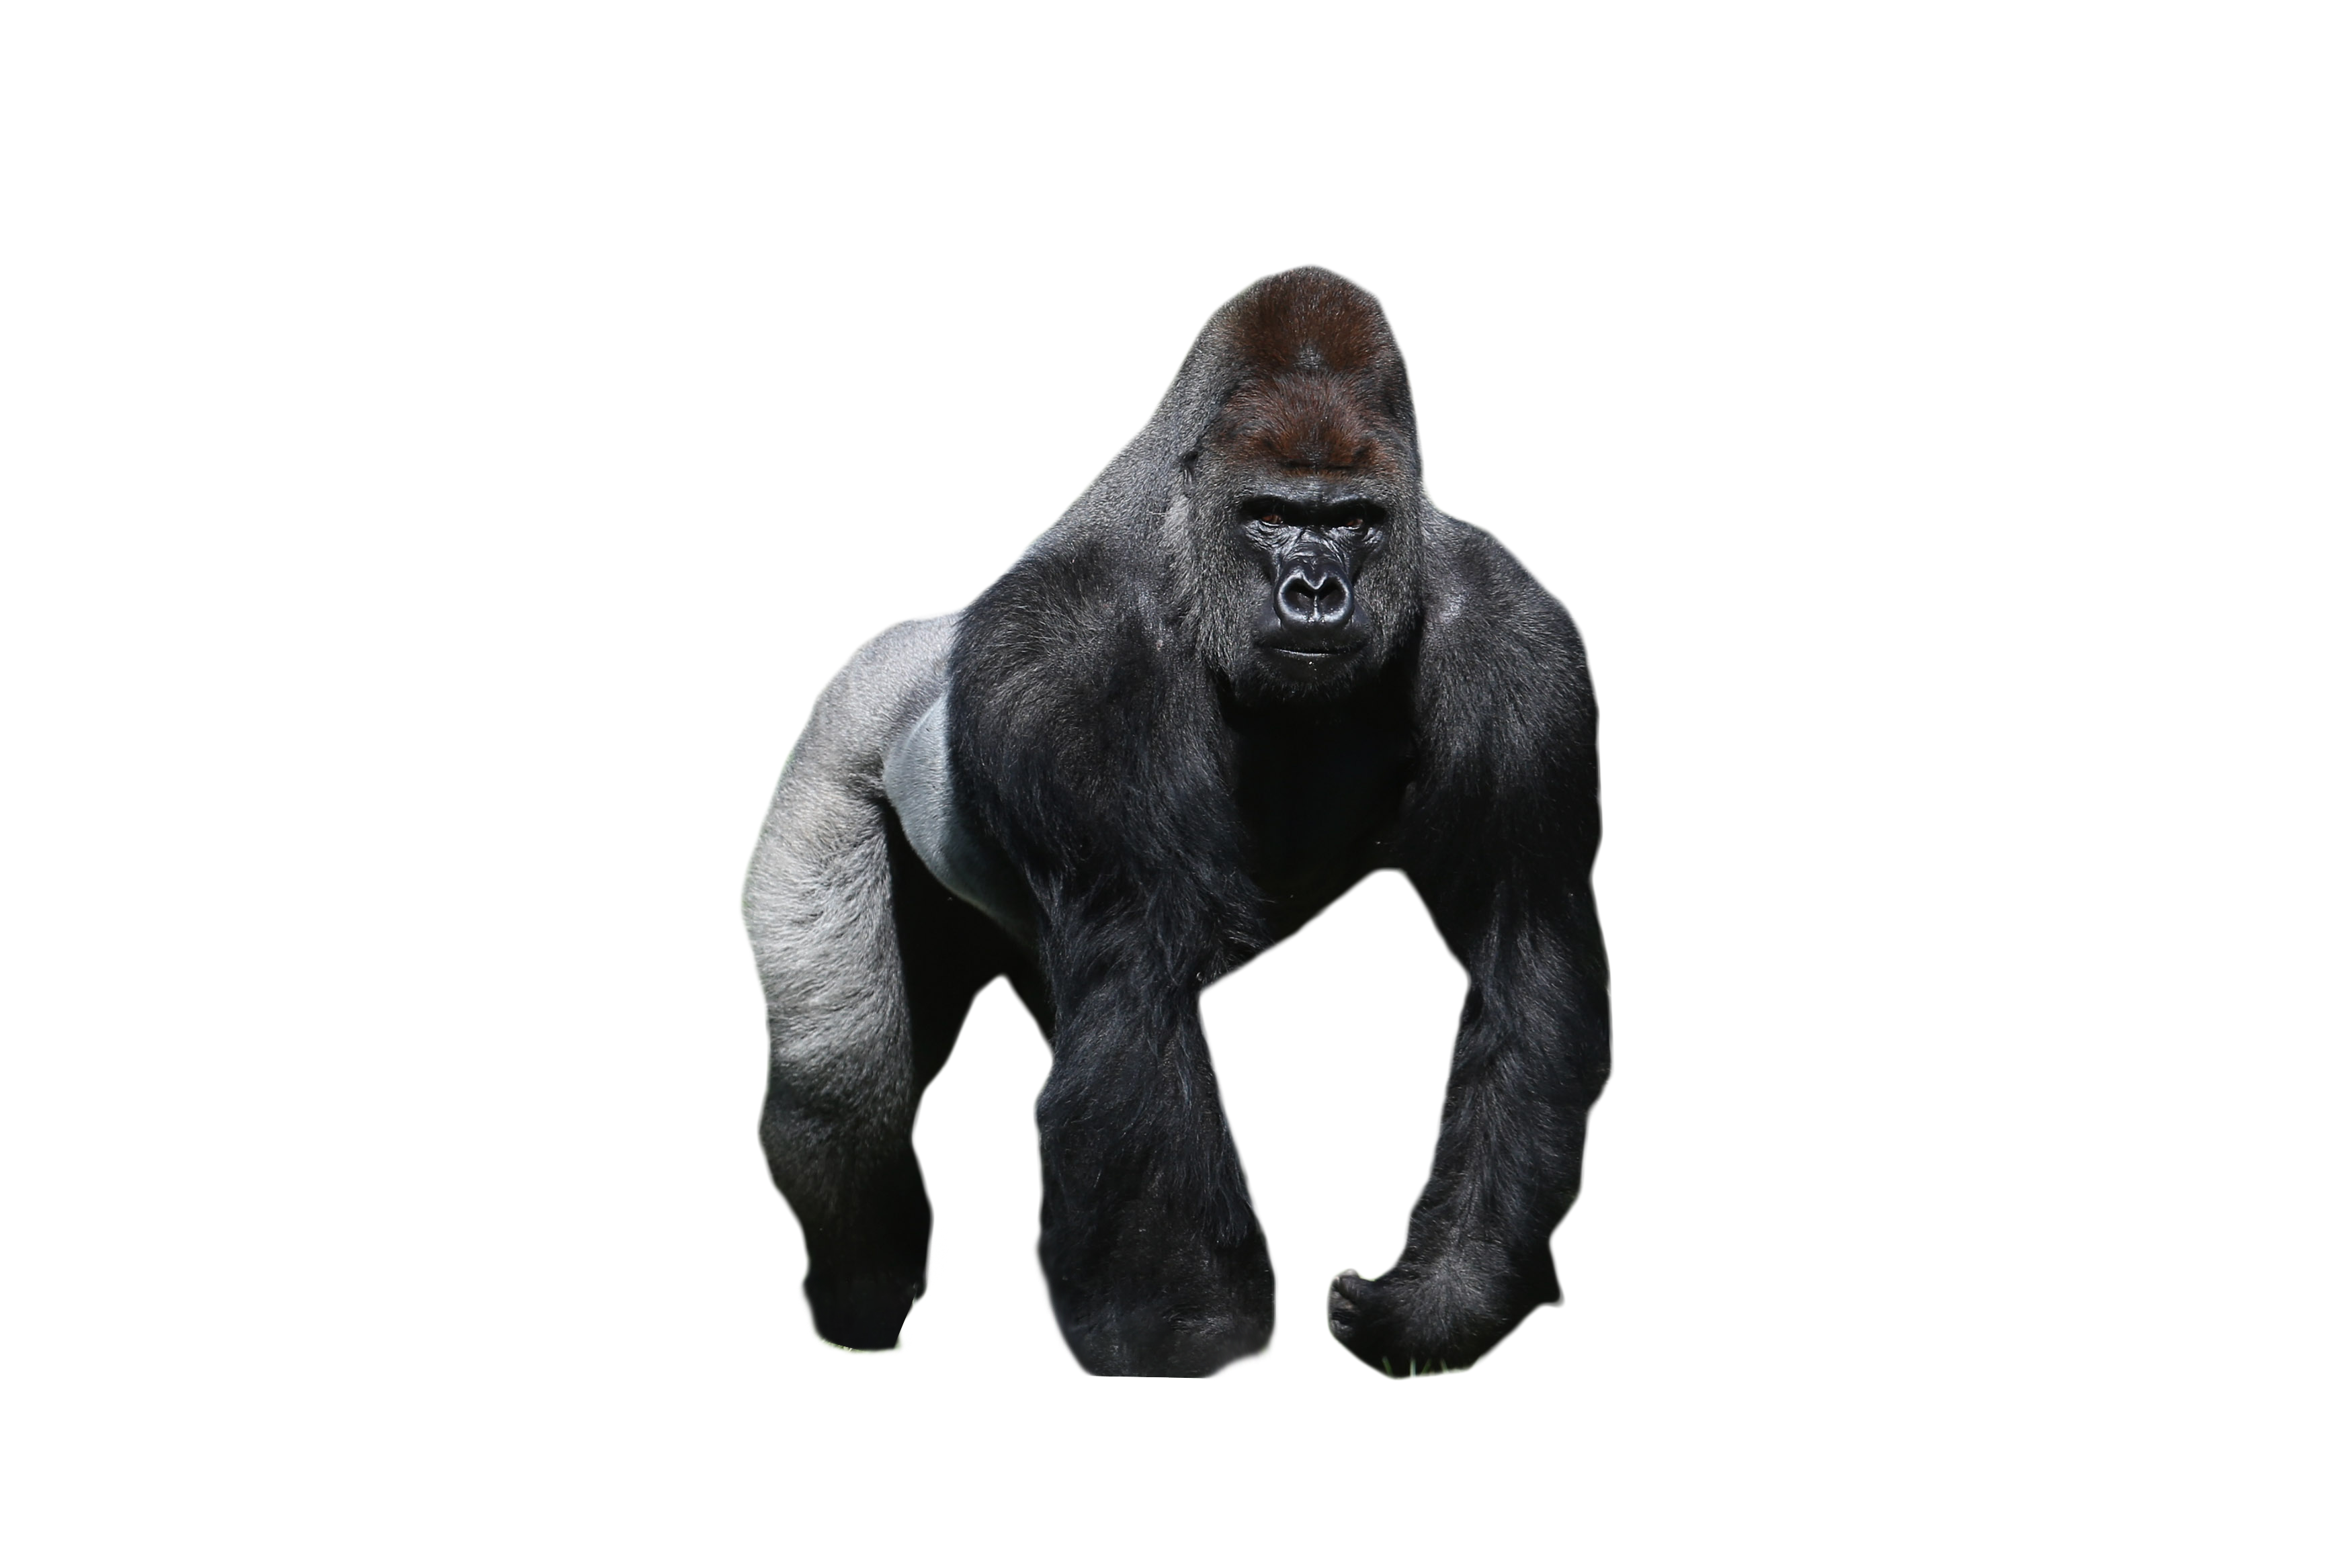 Gorilla PNG Image - PurePNG | Free transparent CC0 PNG Image Library